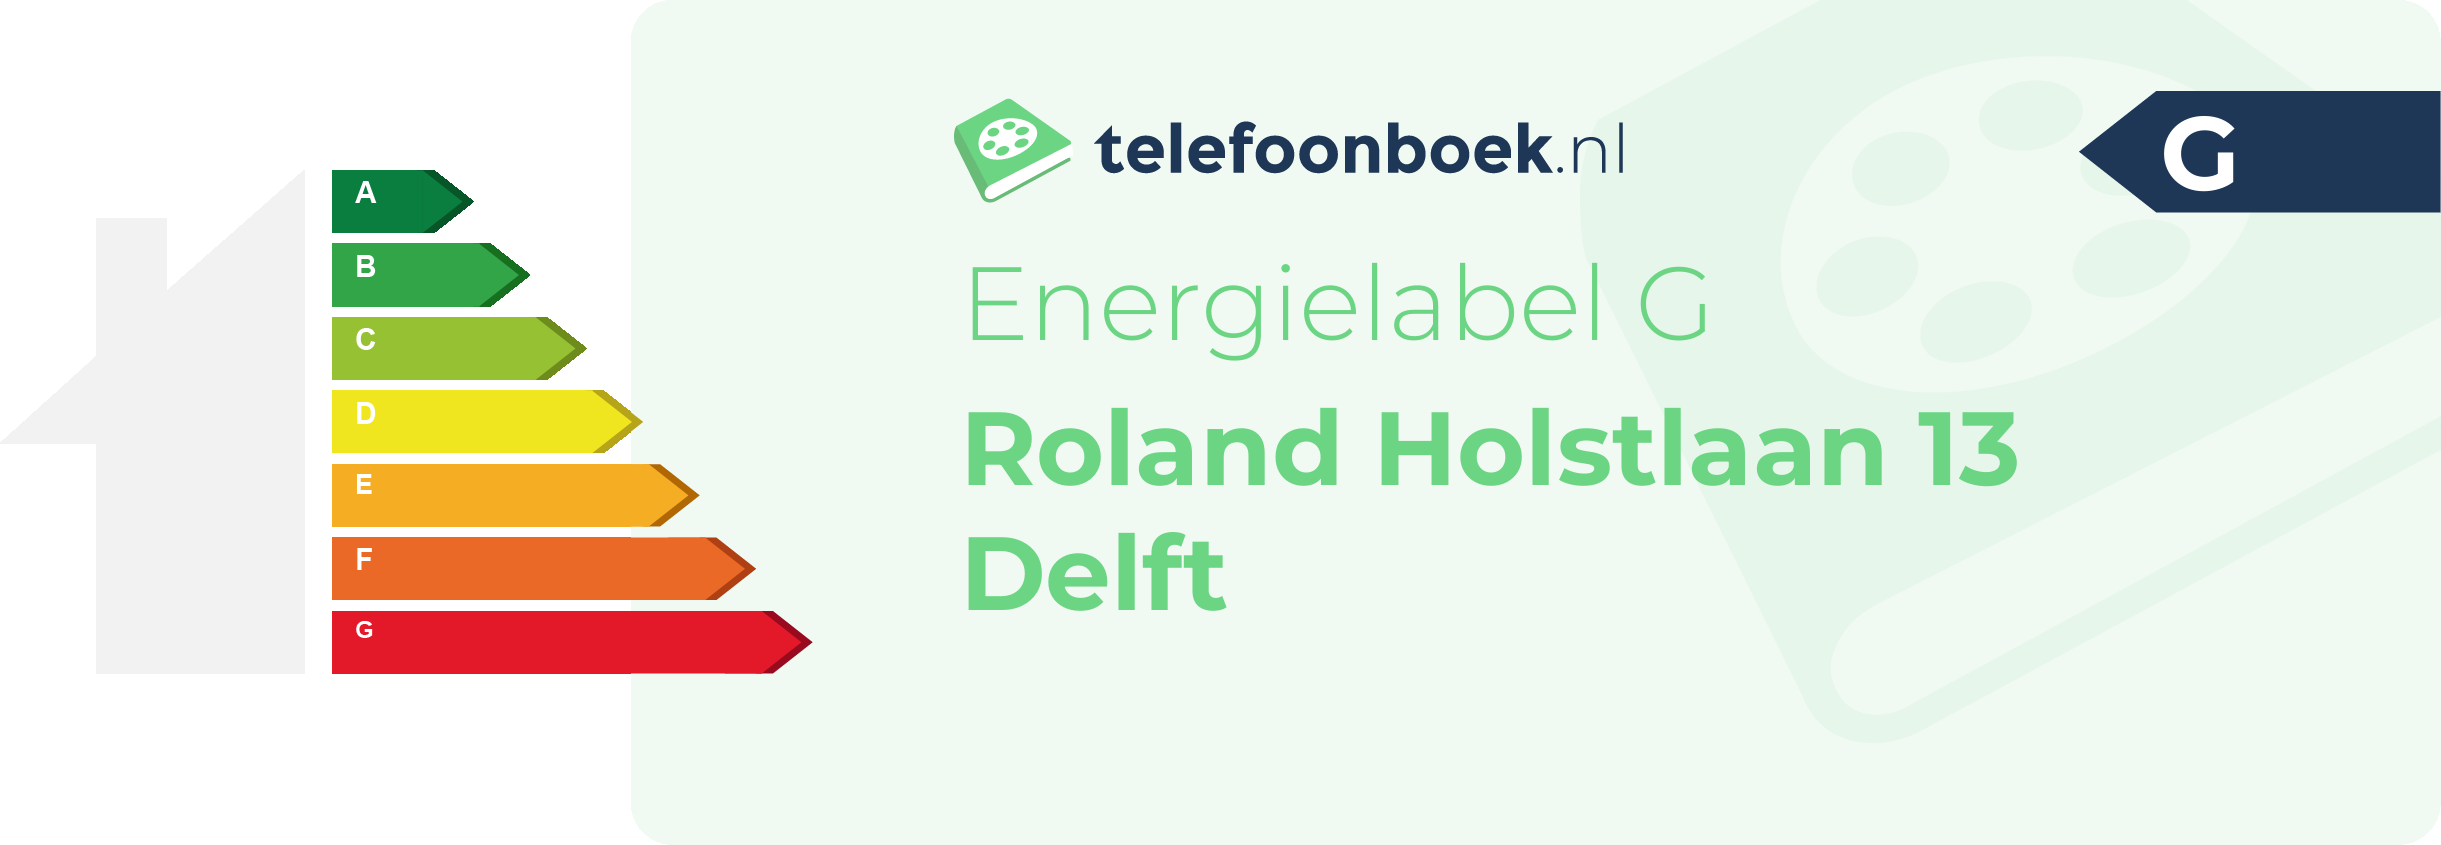 Energielabel Roland Holstlaan 13 Delft